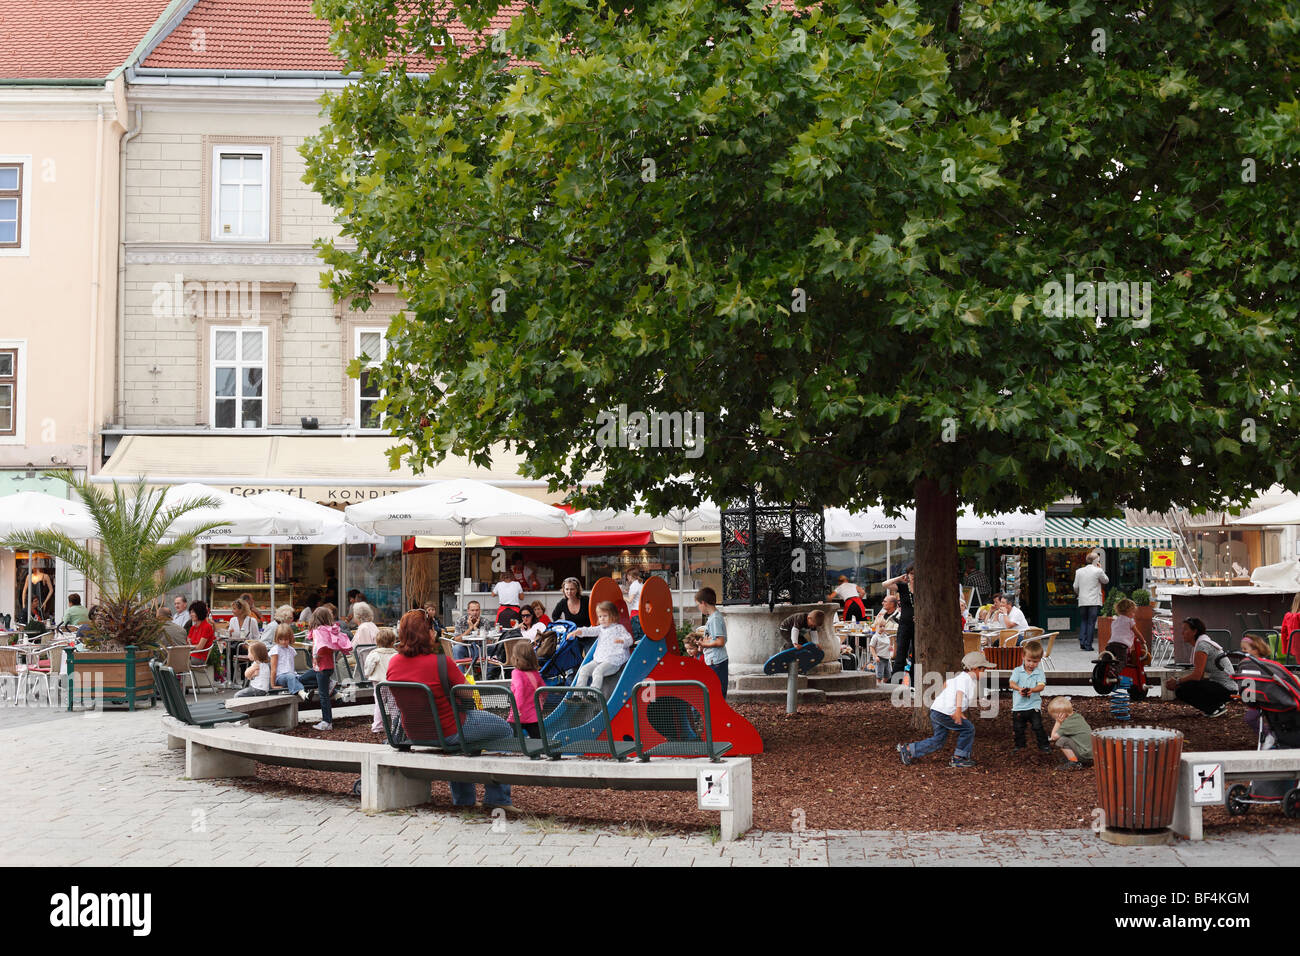 Child's playgroung in the main square, Wiener Neustadt, Lower Austria, Austria, Europe Stock Photo